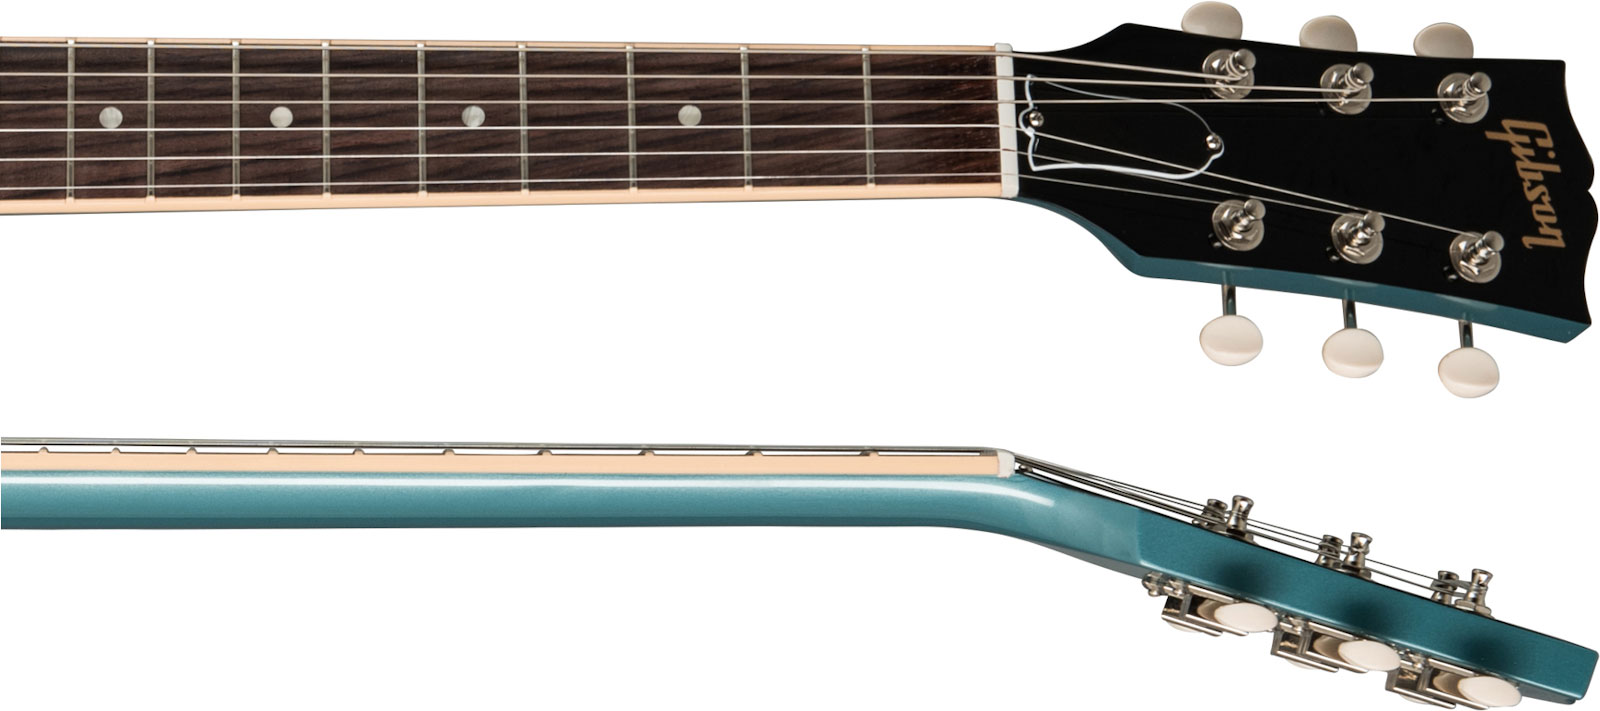 Gibson Sg Special Original P90 - Pelham Blue - Retro-rock elektrische gitaar - Variation 3